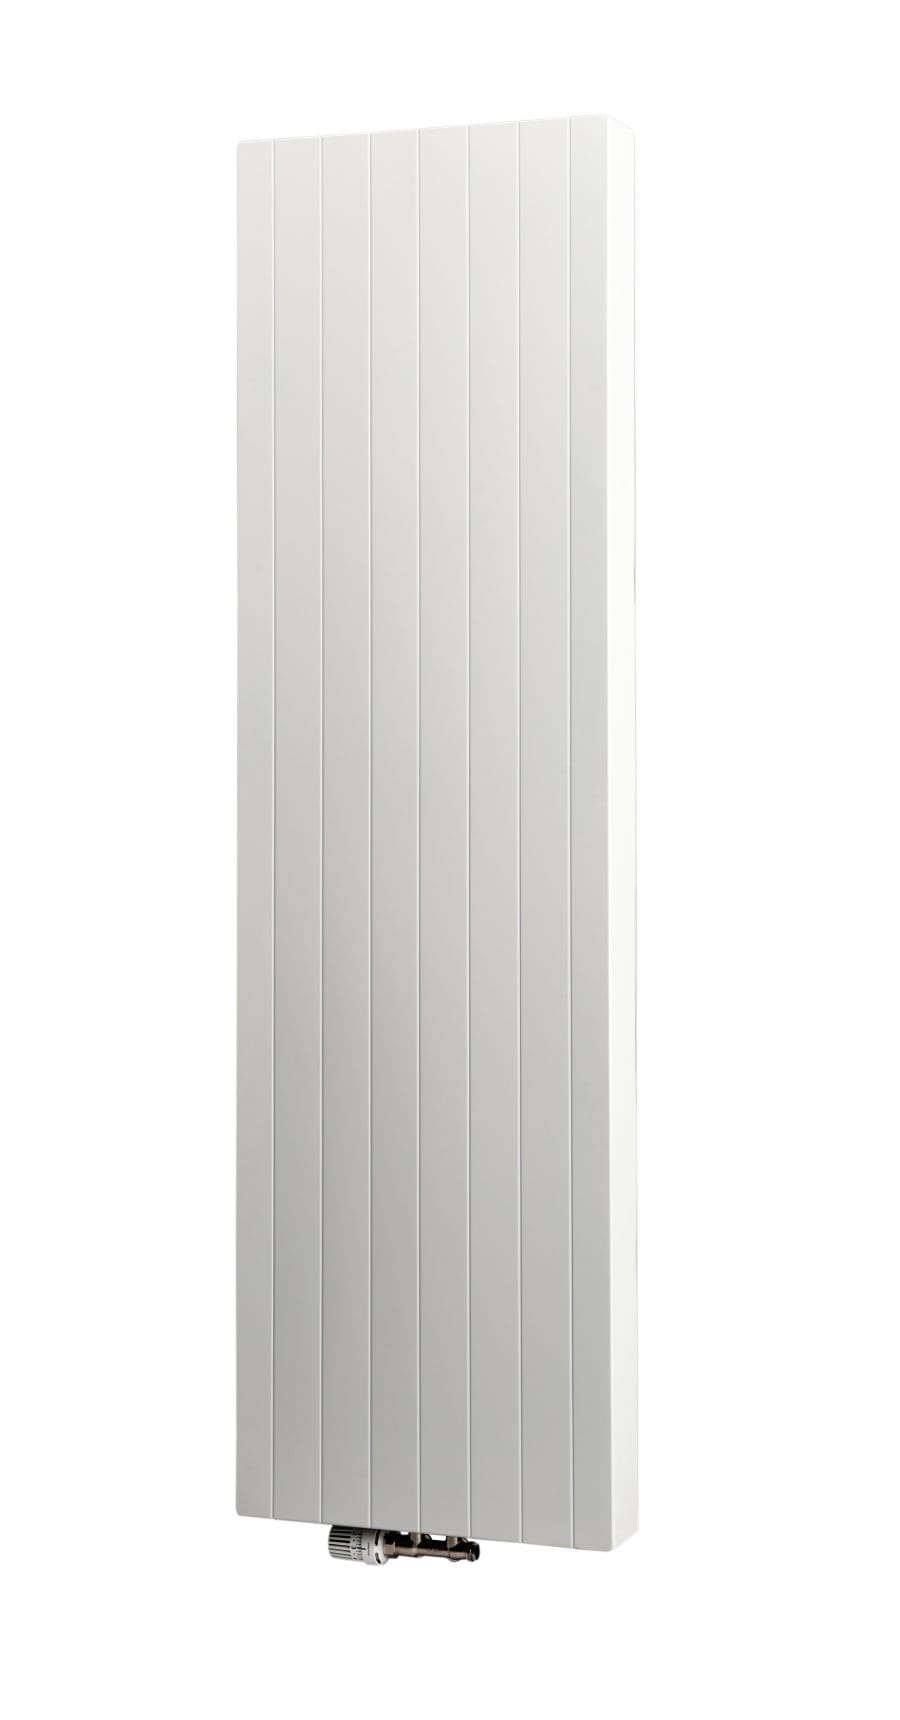 Thermrad - radiator kopen - Incl. bij u thuis -